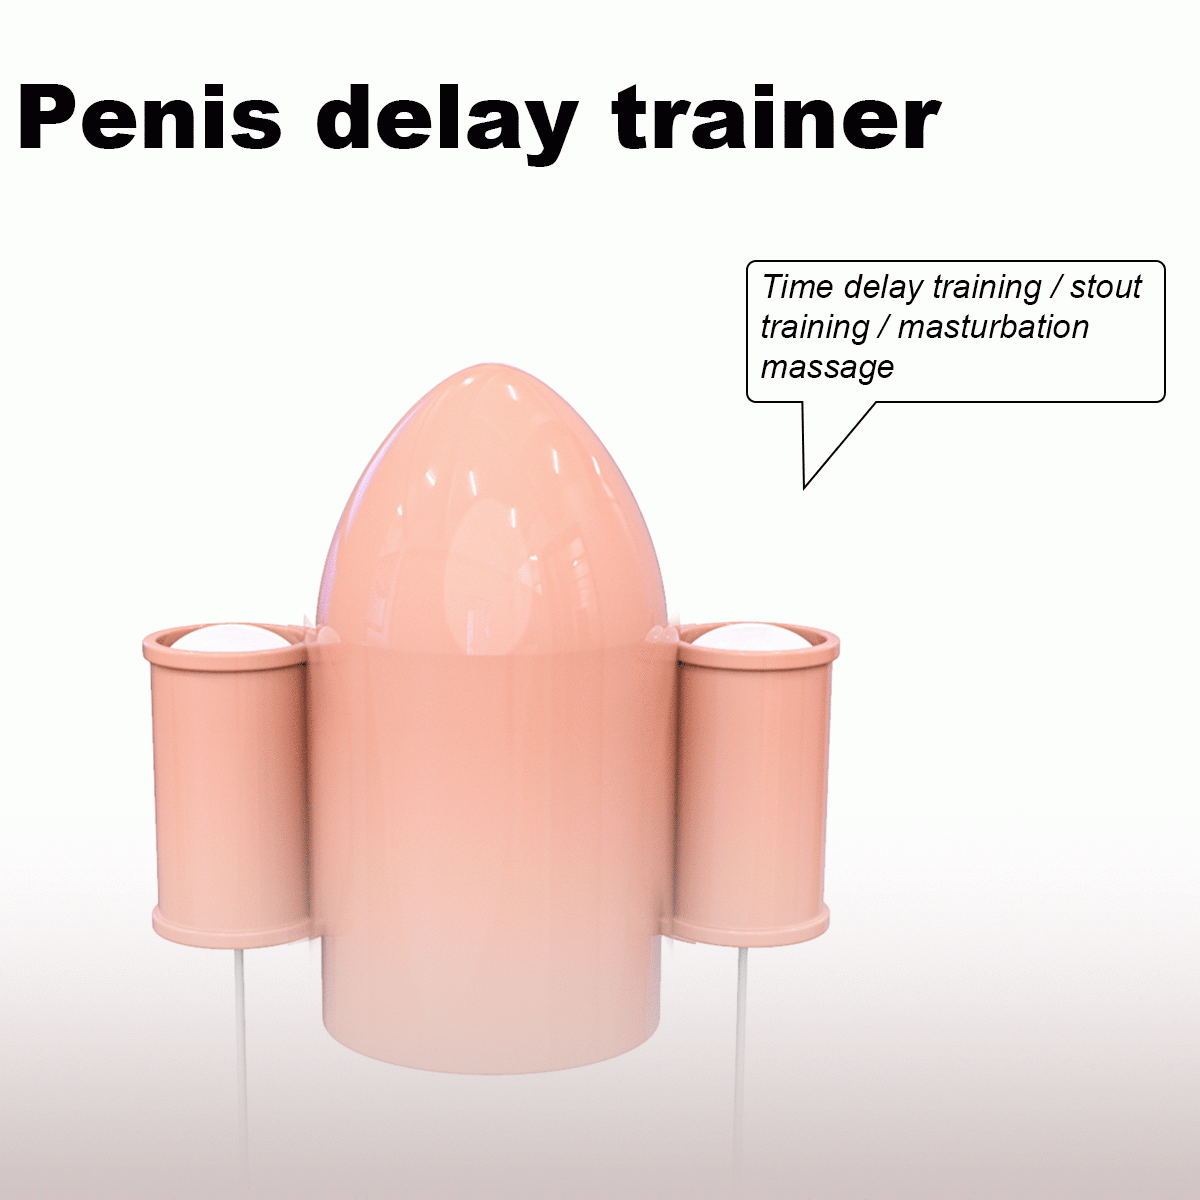 Penile delay trainer